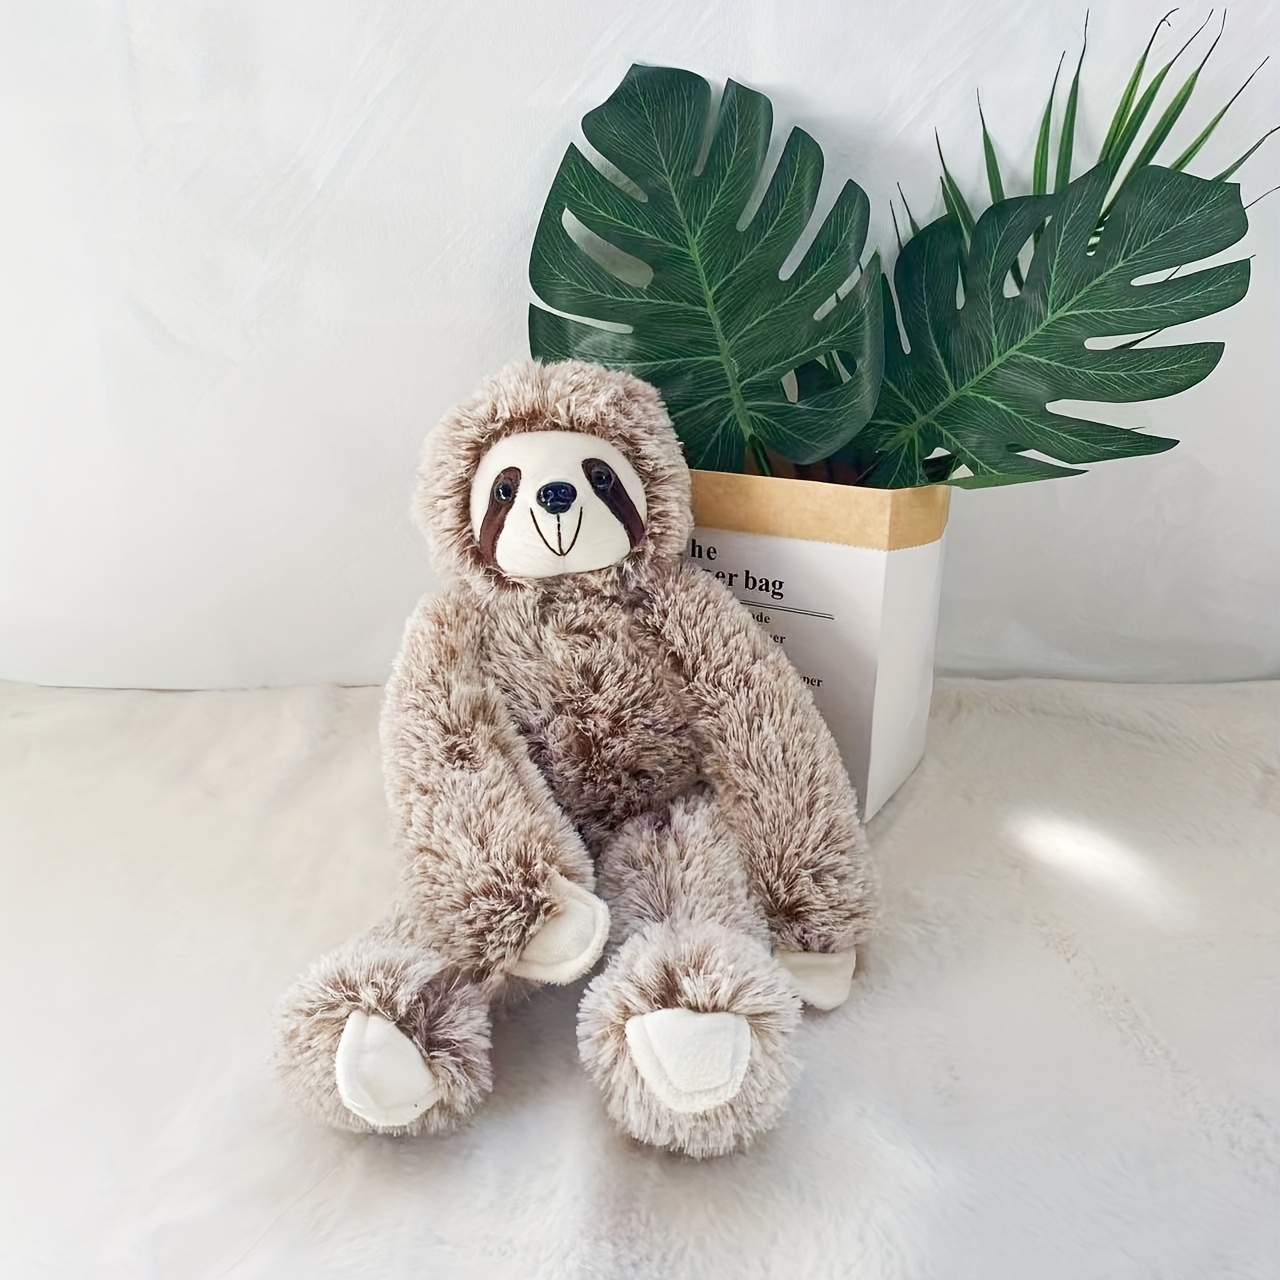 15 7in Popular Sloth Plush Toy - Best Birthday Gift - Free Shipping